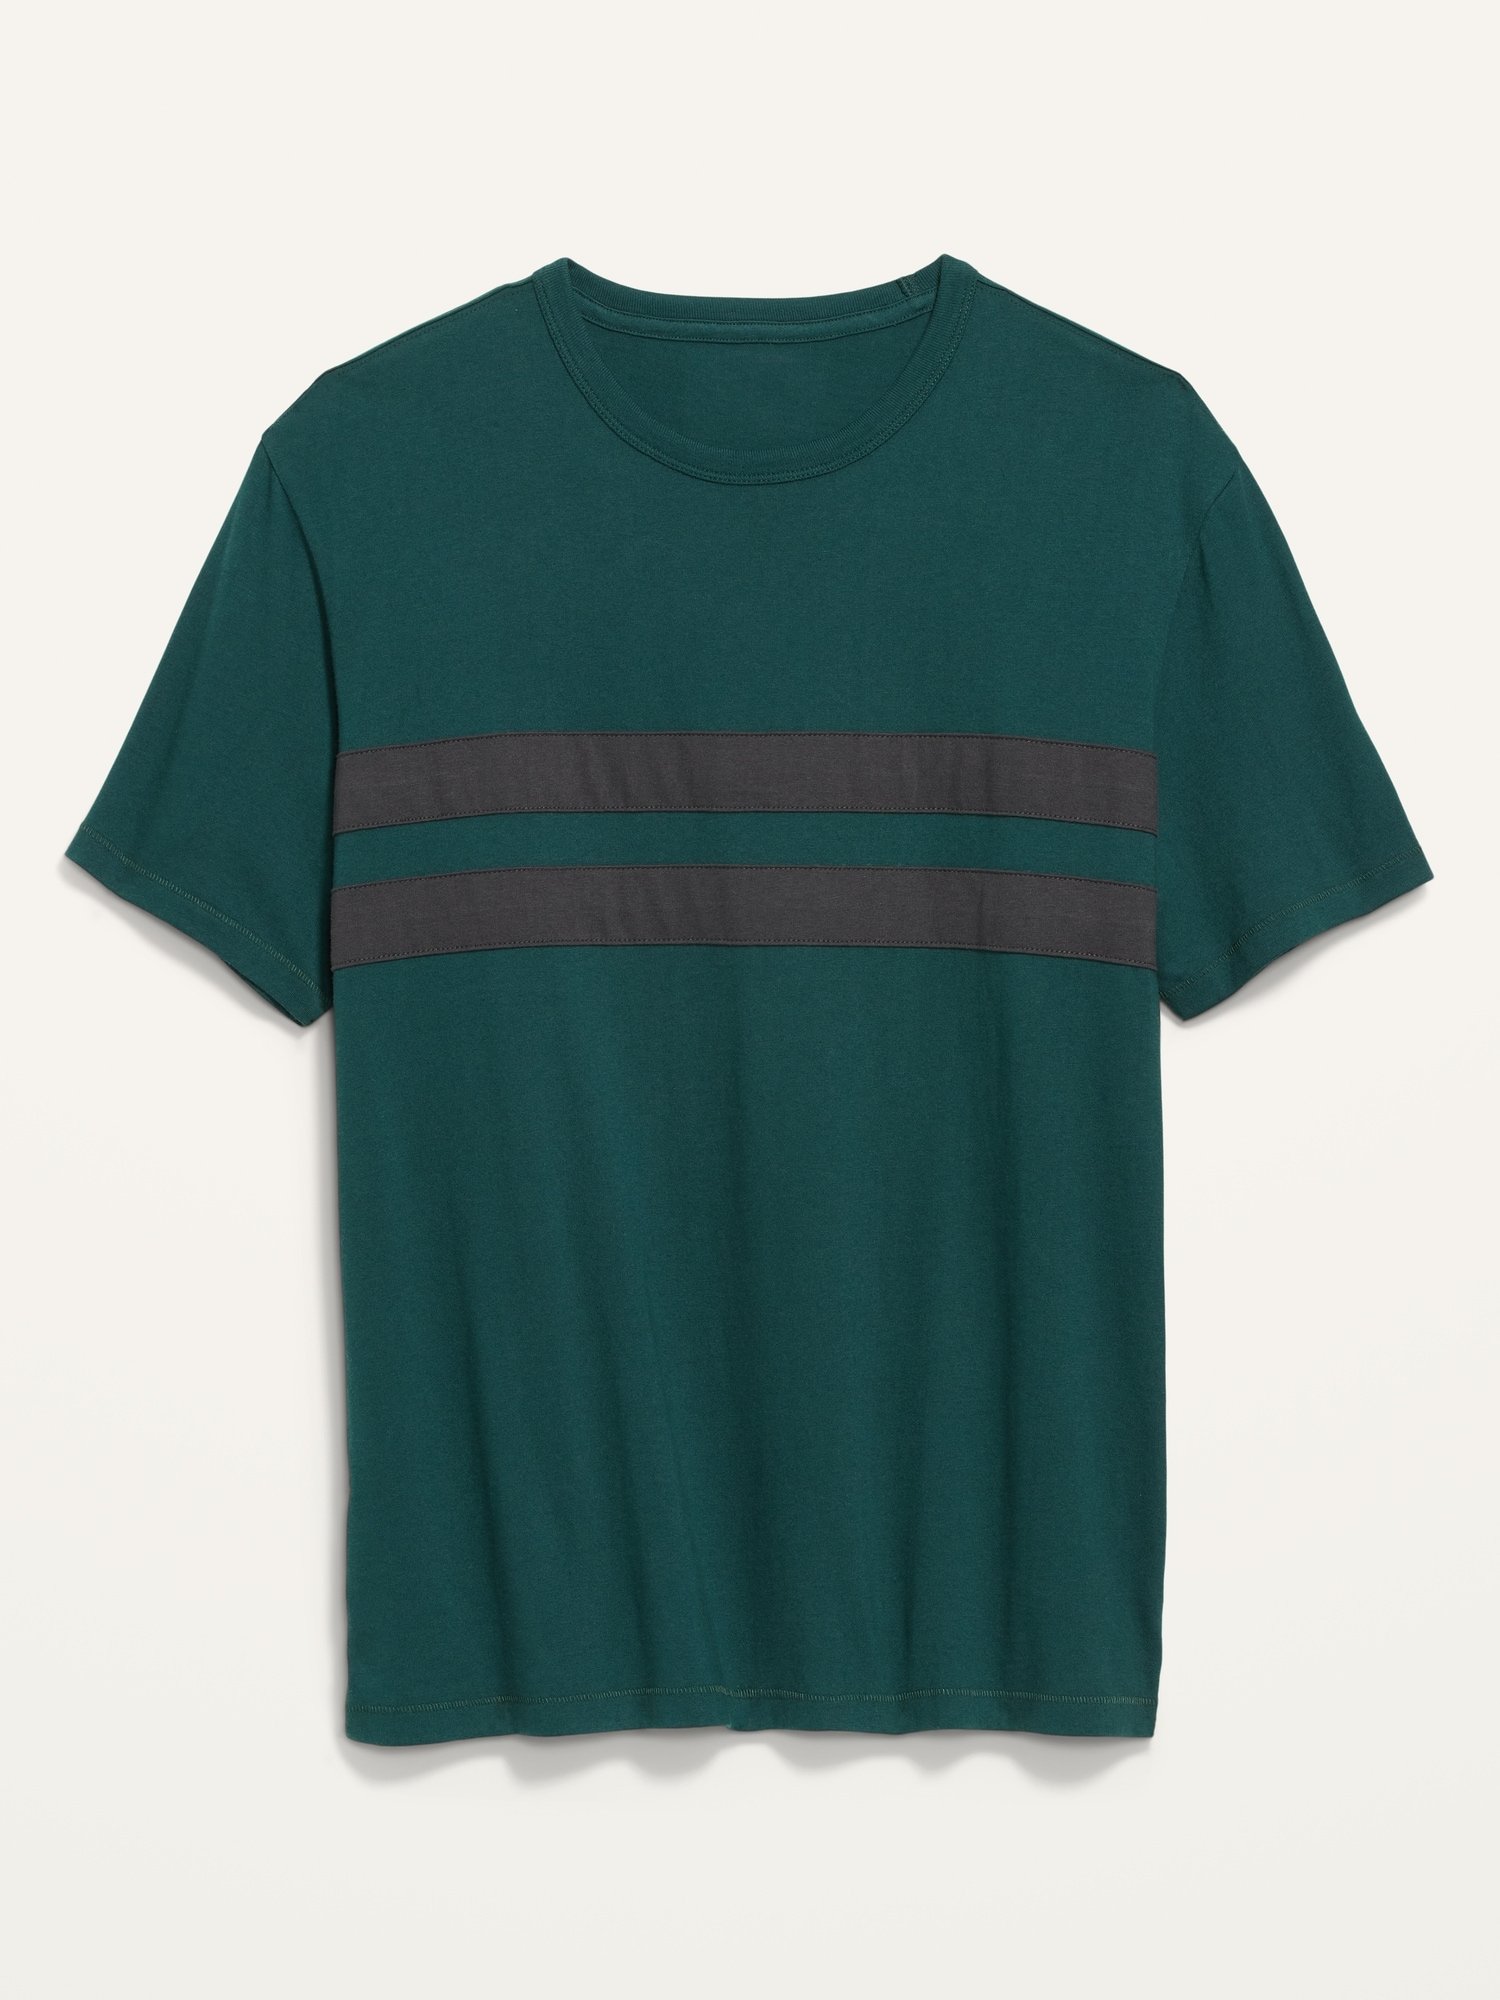 ONLINE EXCLUSIVE_Loose-Fit Chest-Stripe T-Shirt for Men_EmeraldIsle_1250.jpeg